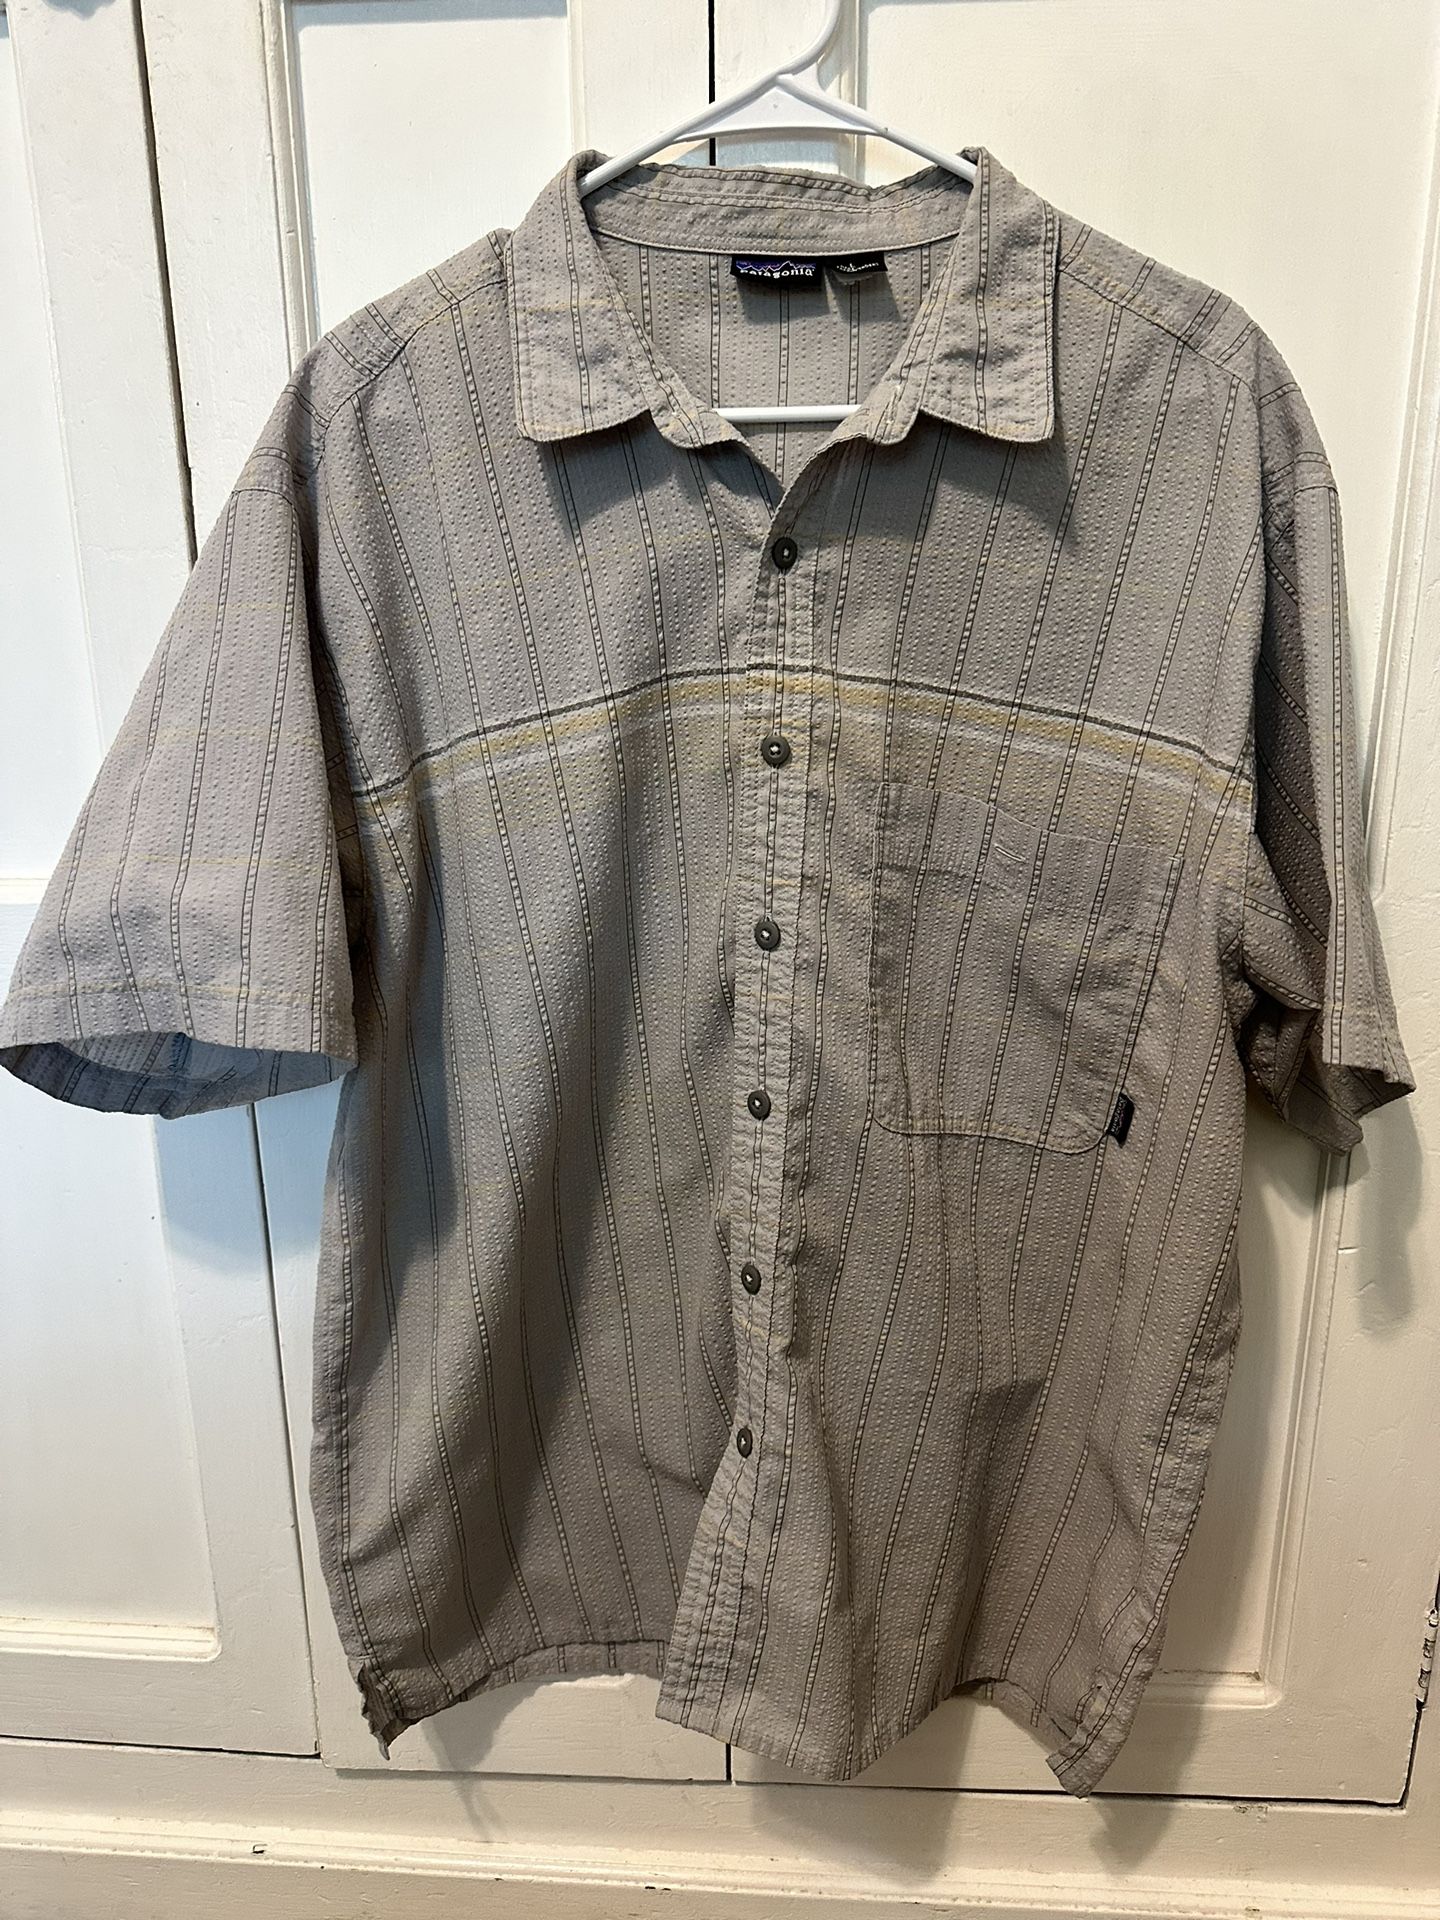 Patagonia Short Sleeve Shirt. Size L. Men’s 